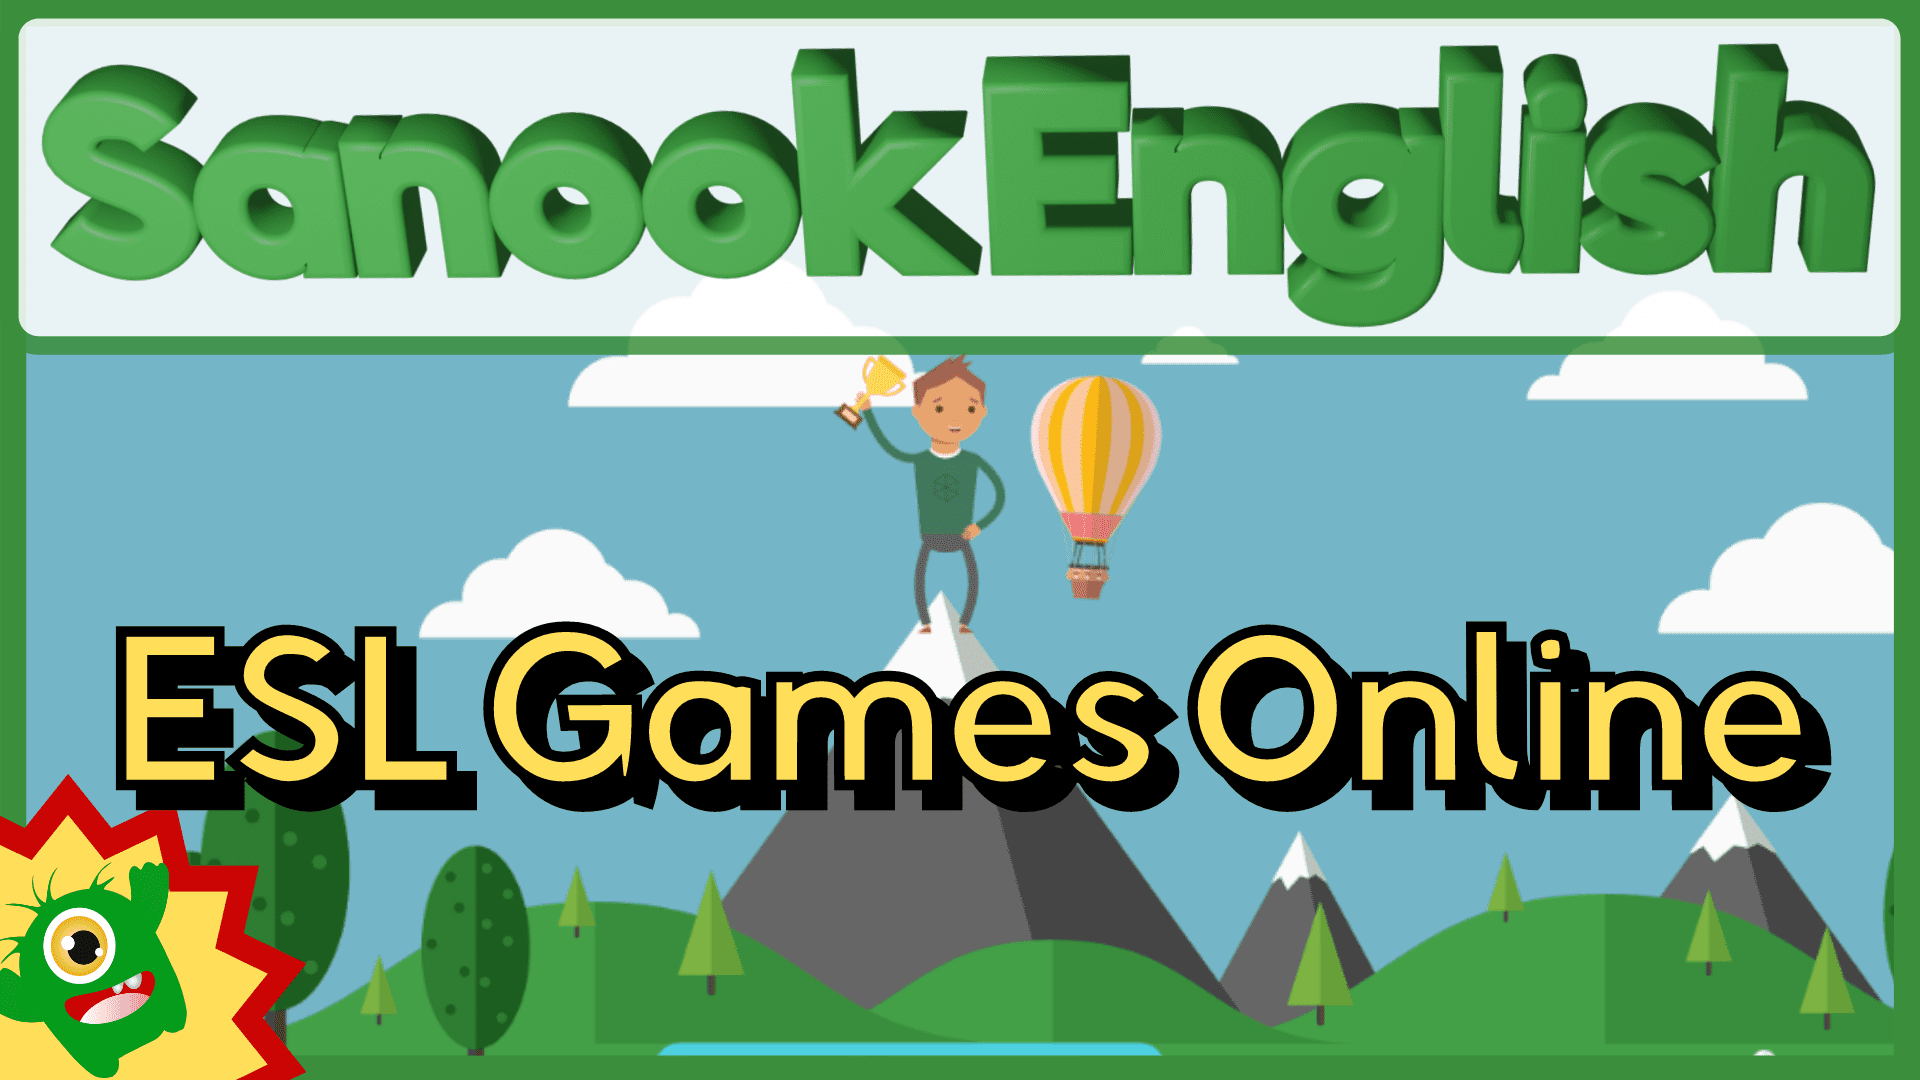 ESL games online video for Sanook English